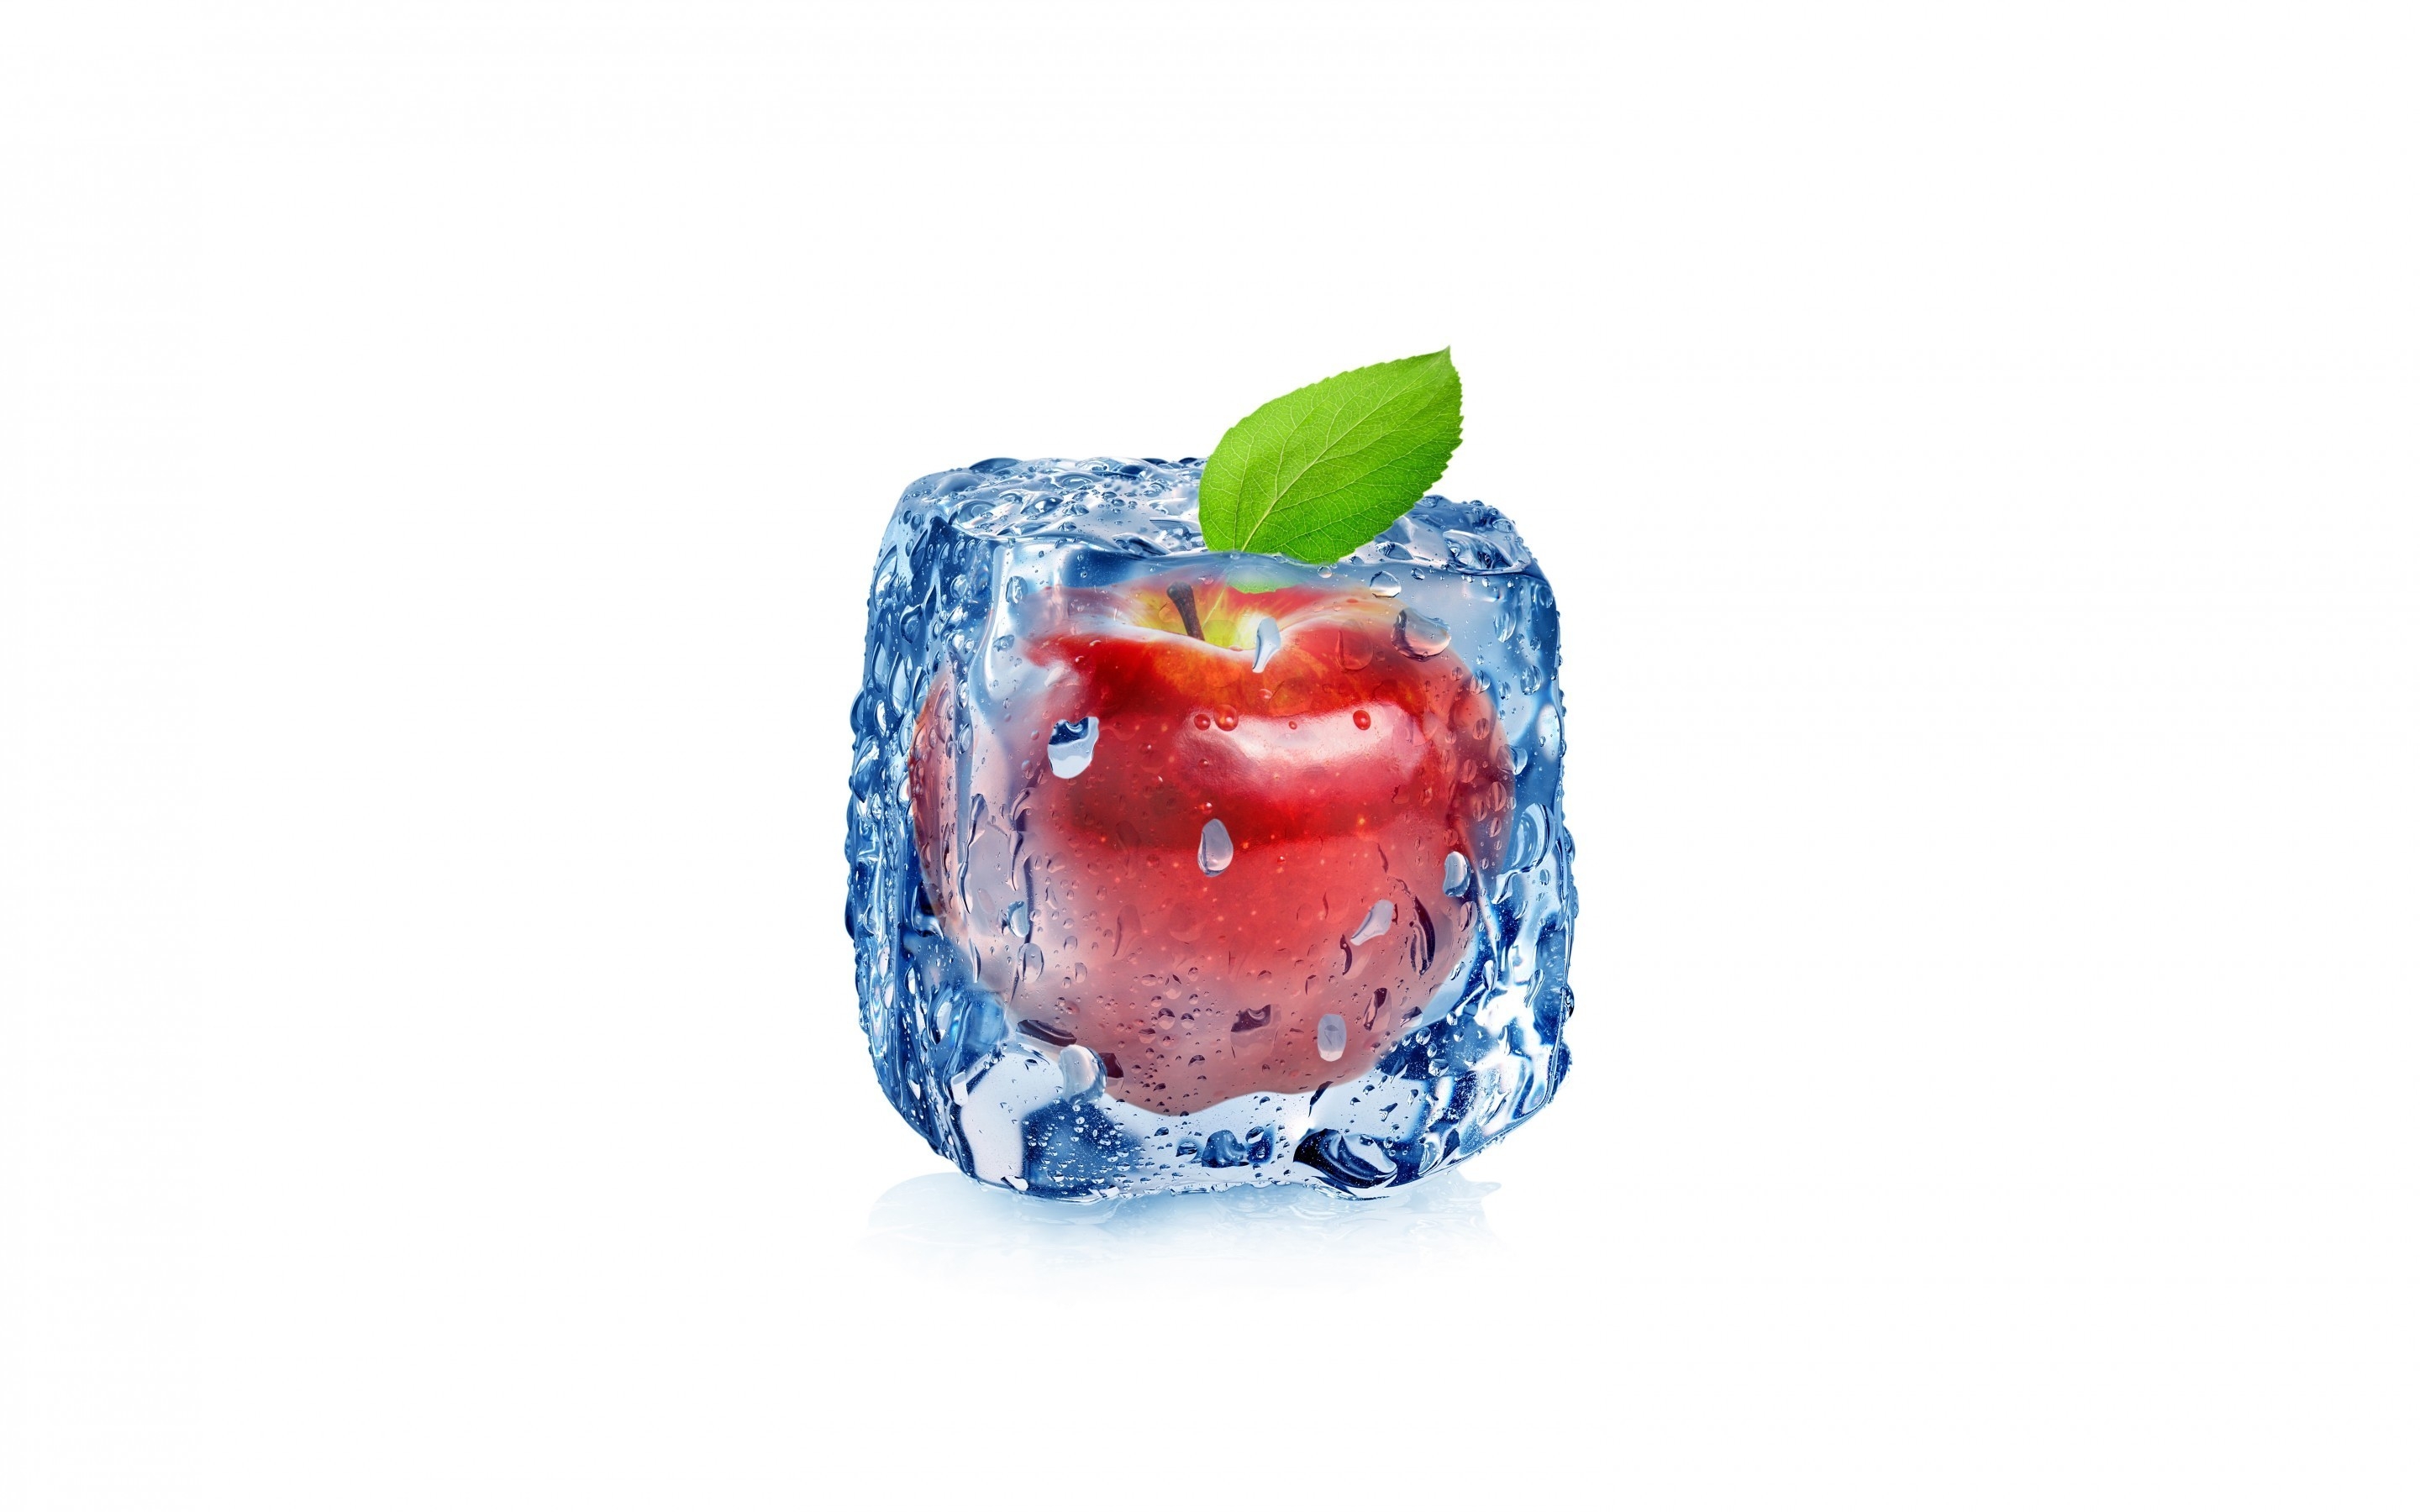 Frozen Apple for 2880 x 1800 Retina Display resolution